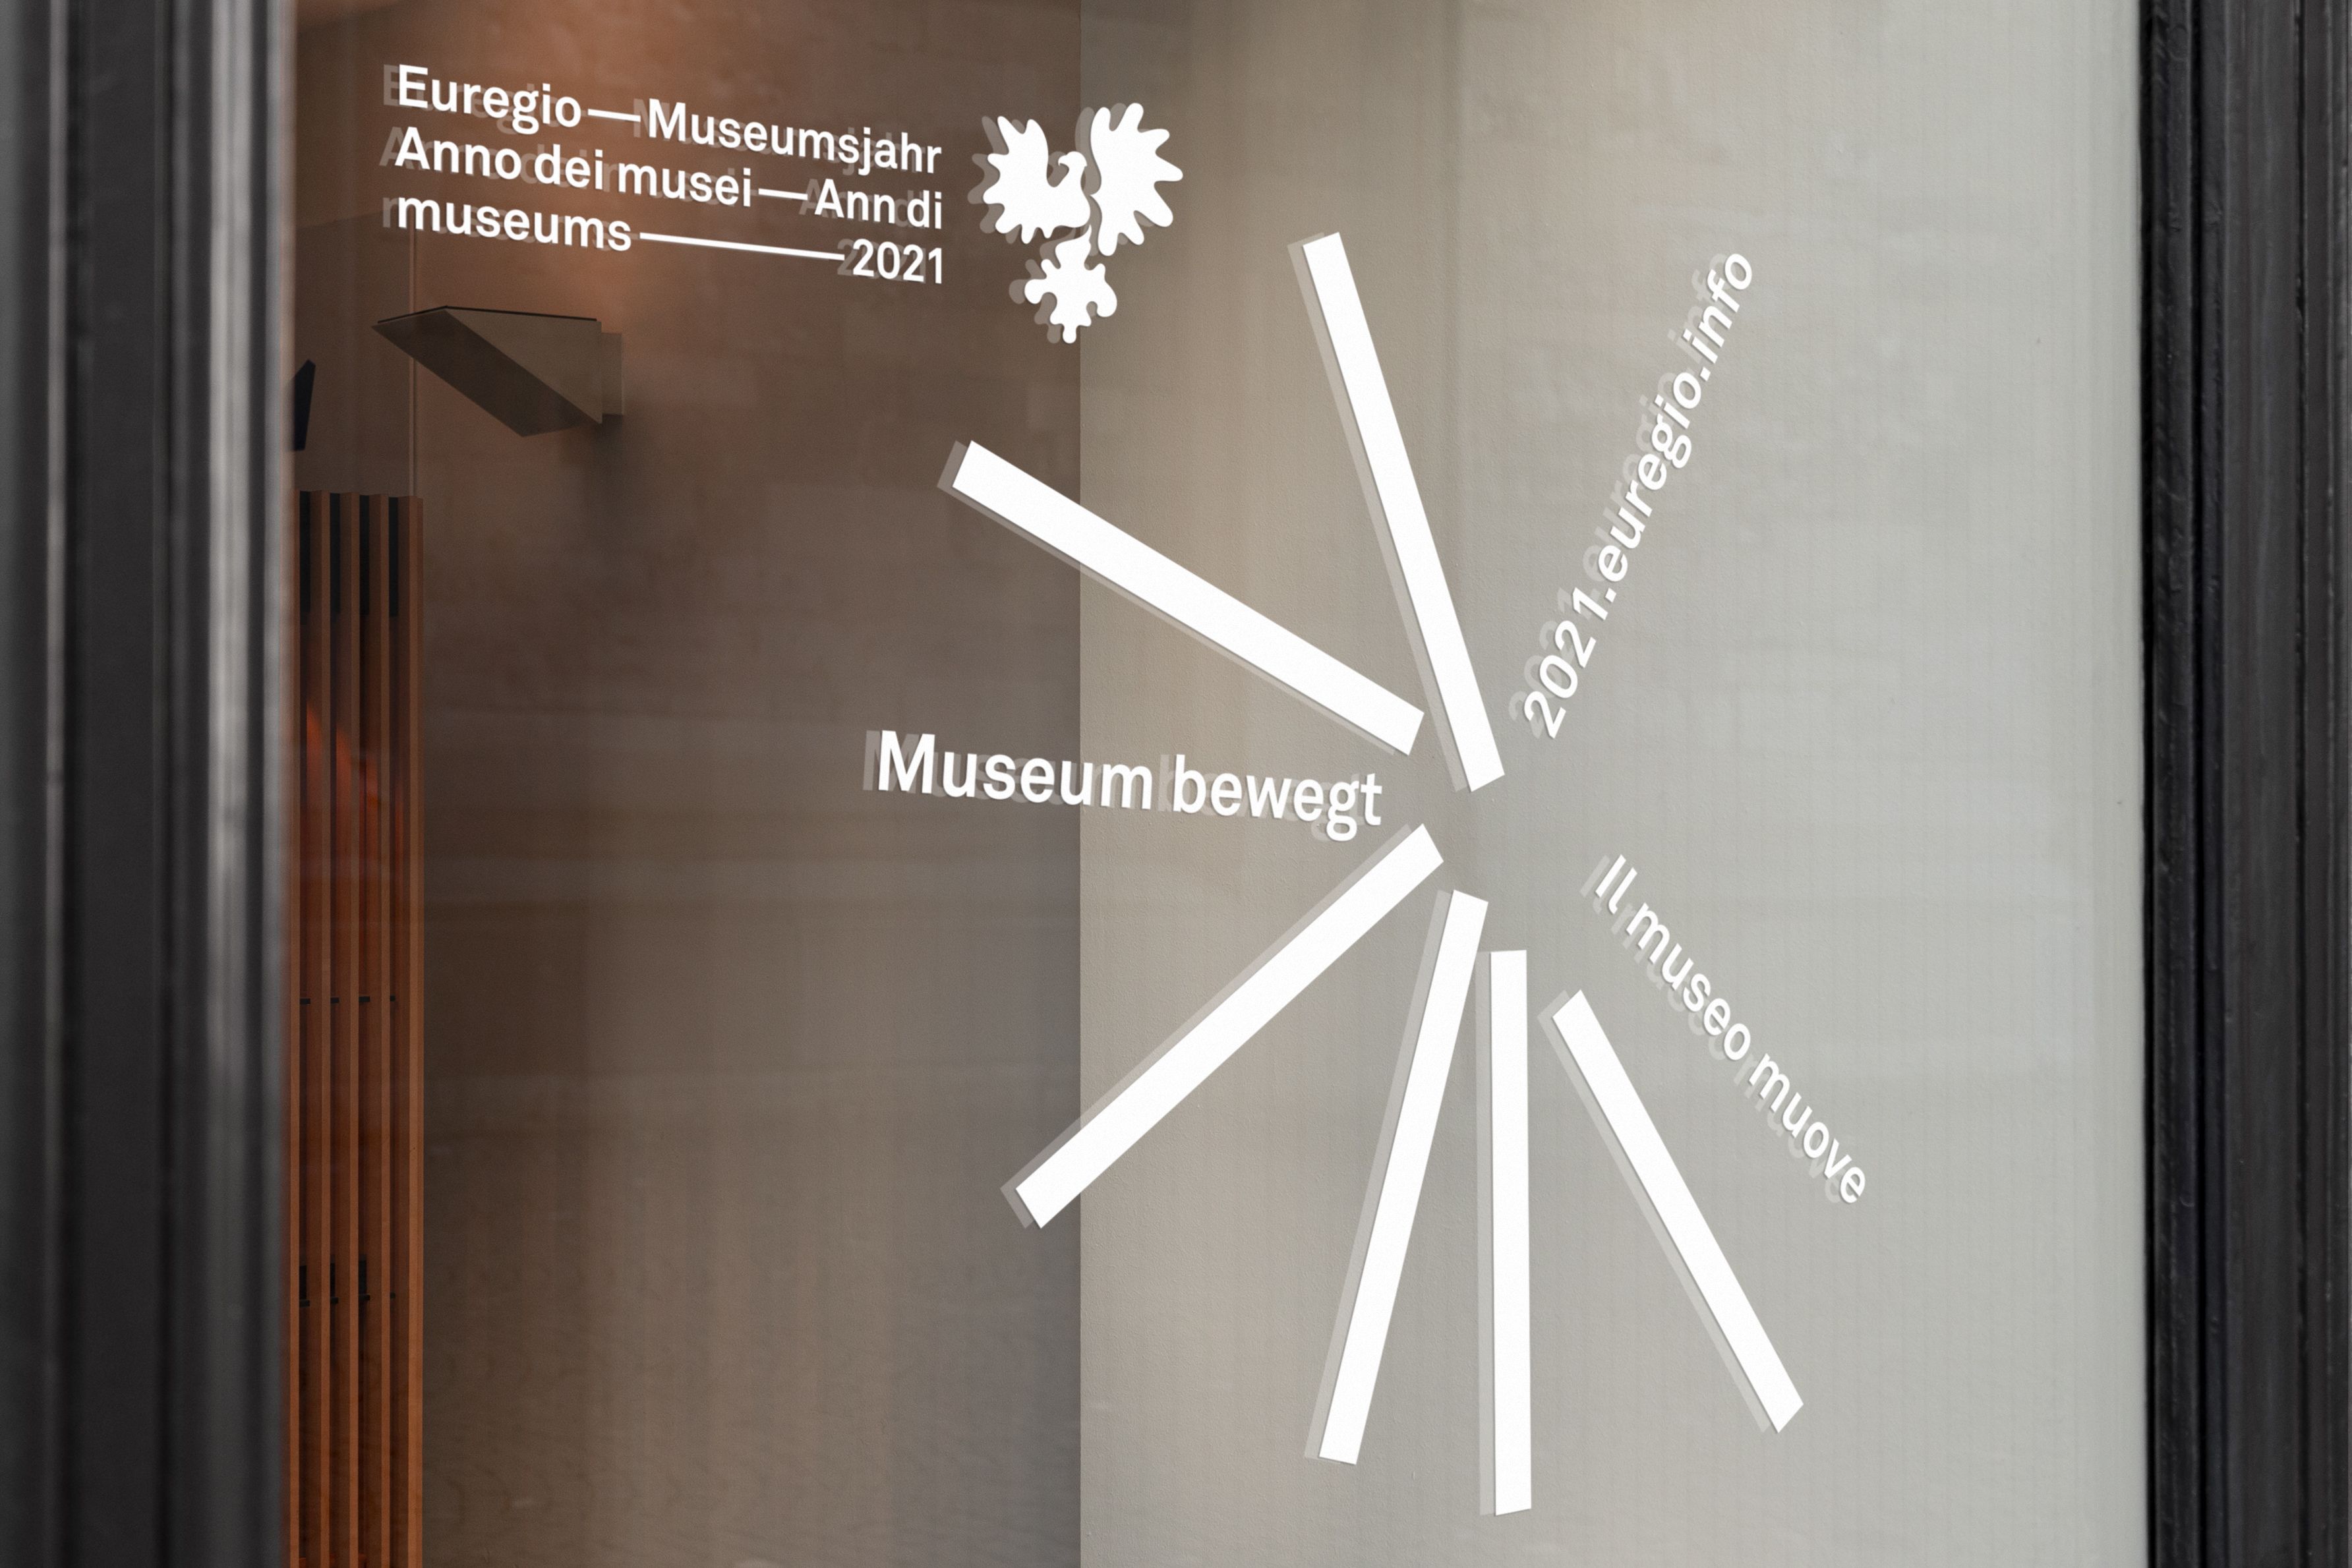 Museum bewegt – Il museo muove